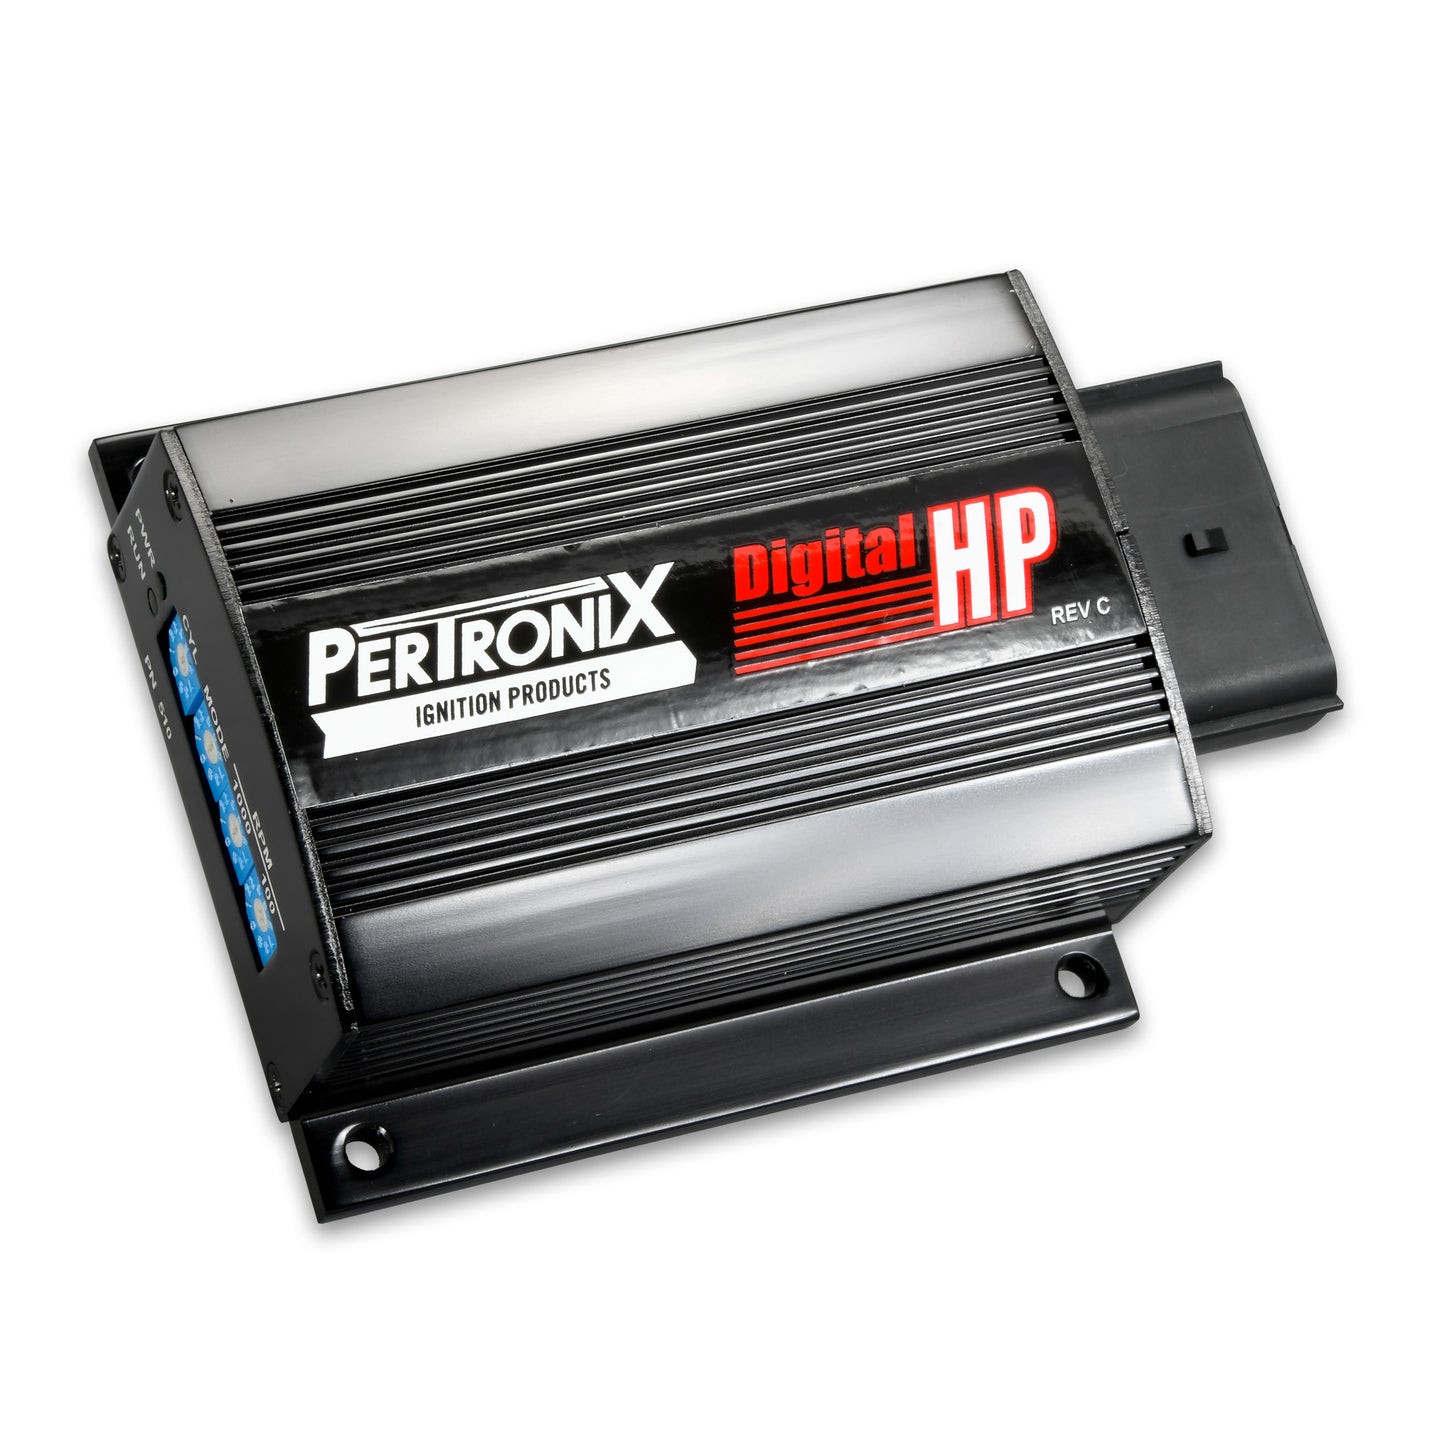 PerTronix 510 Digital HP Ignition Box Black Anodized Finish